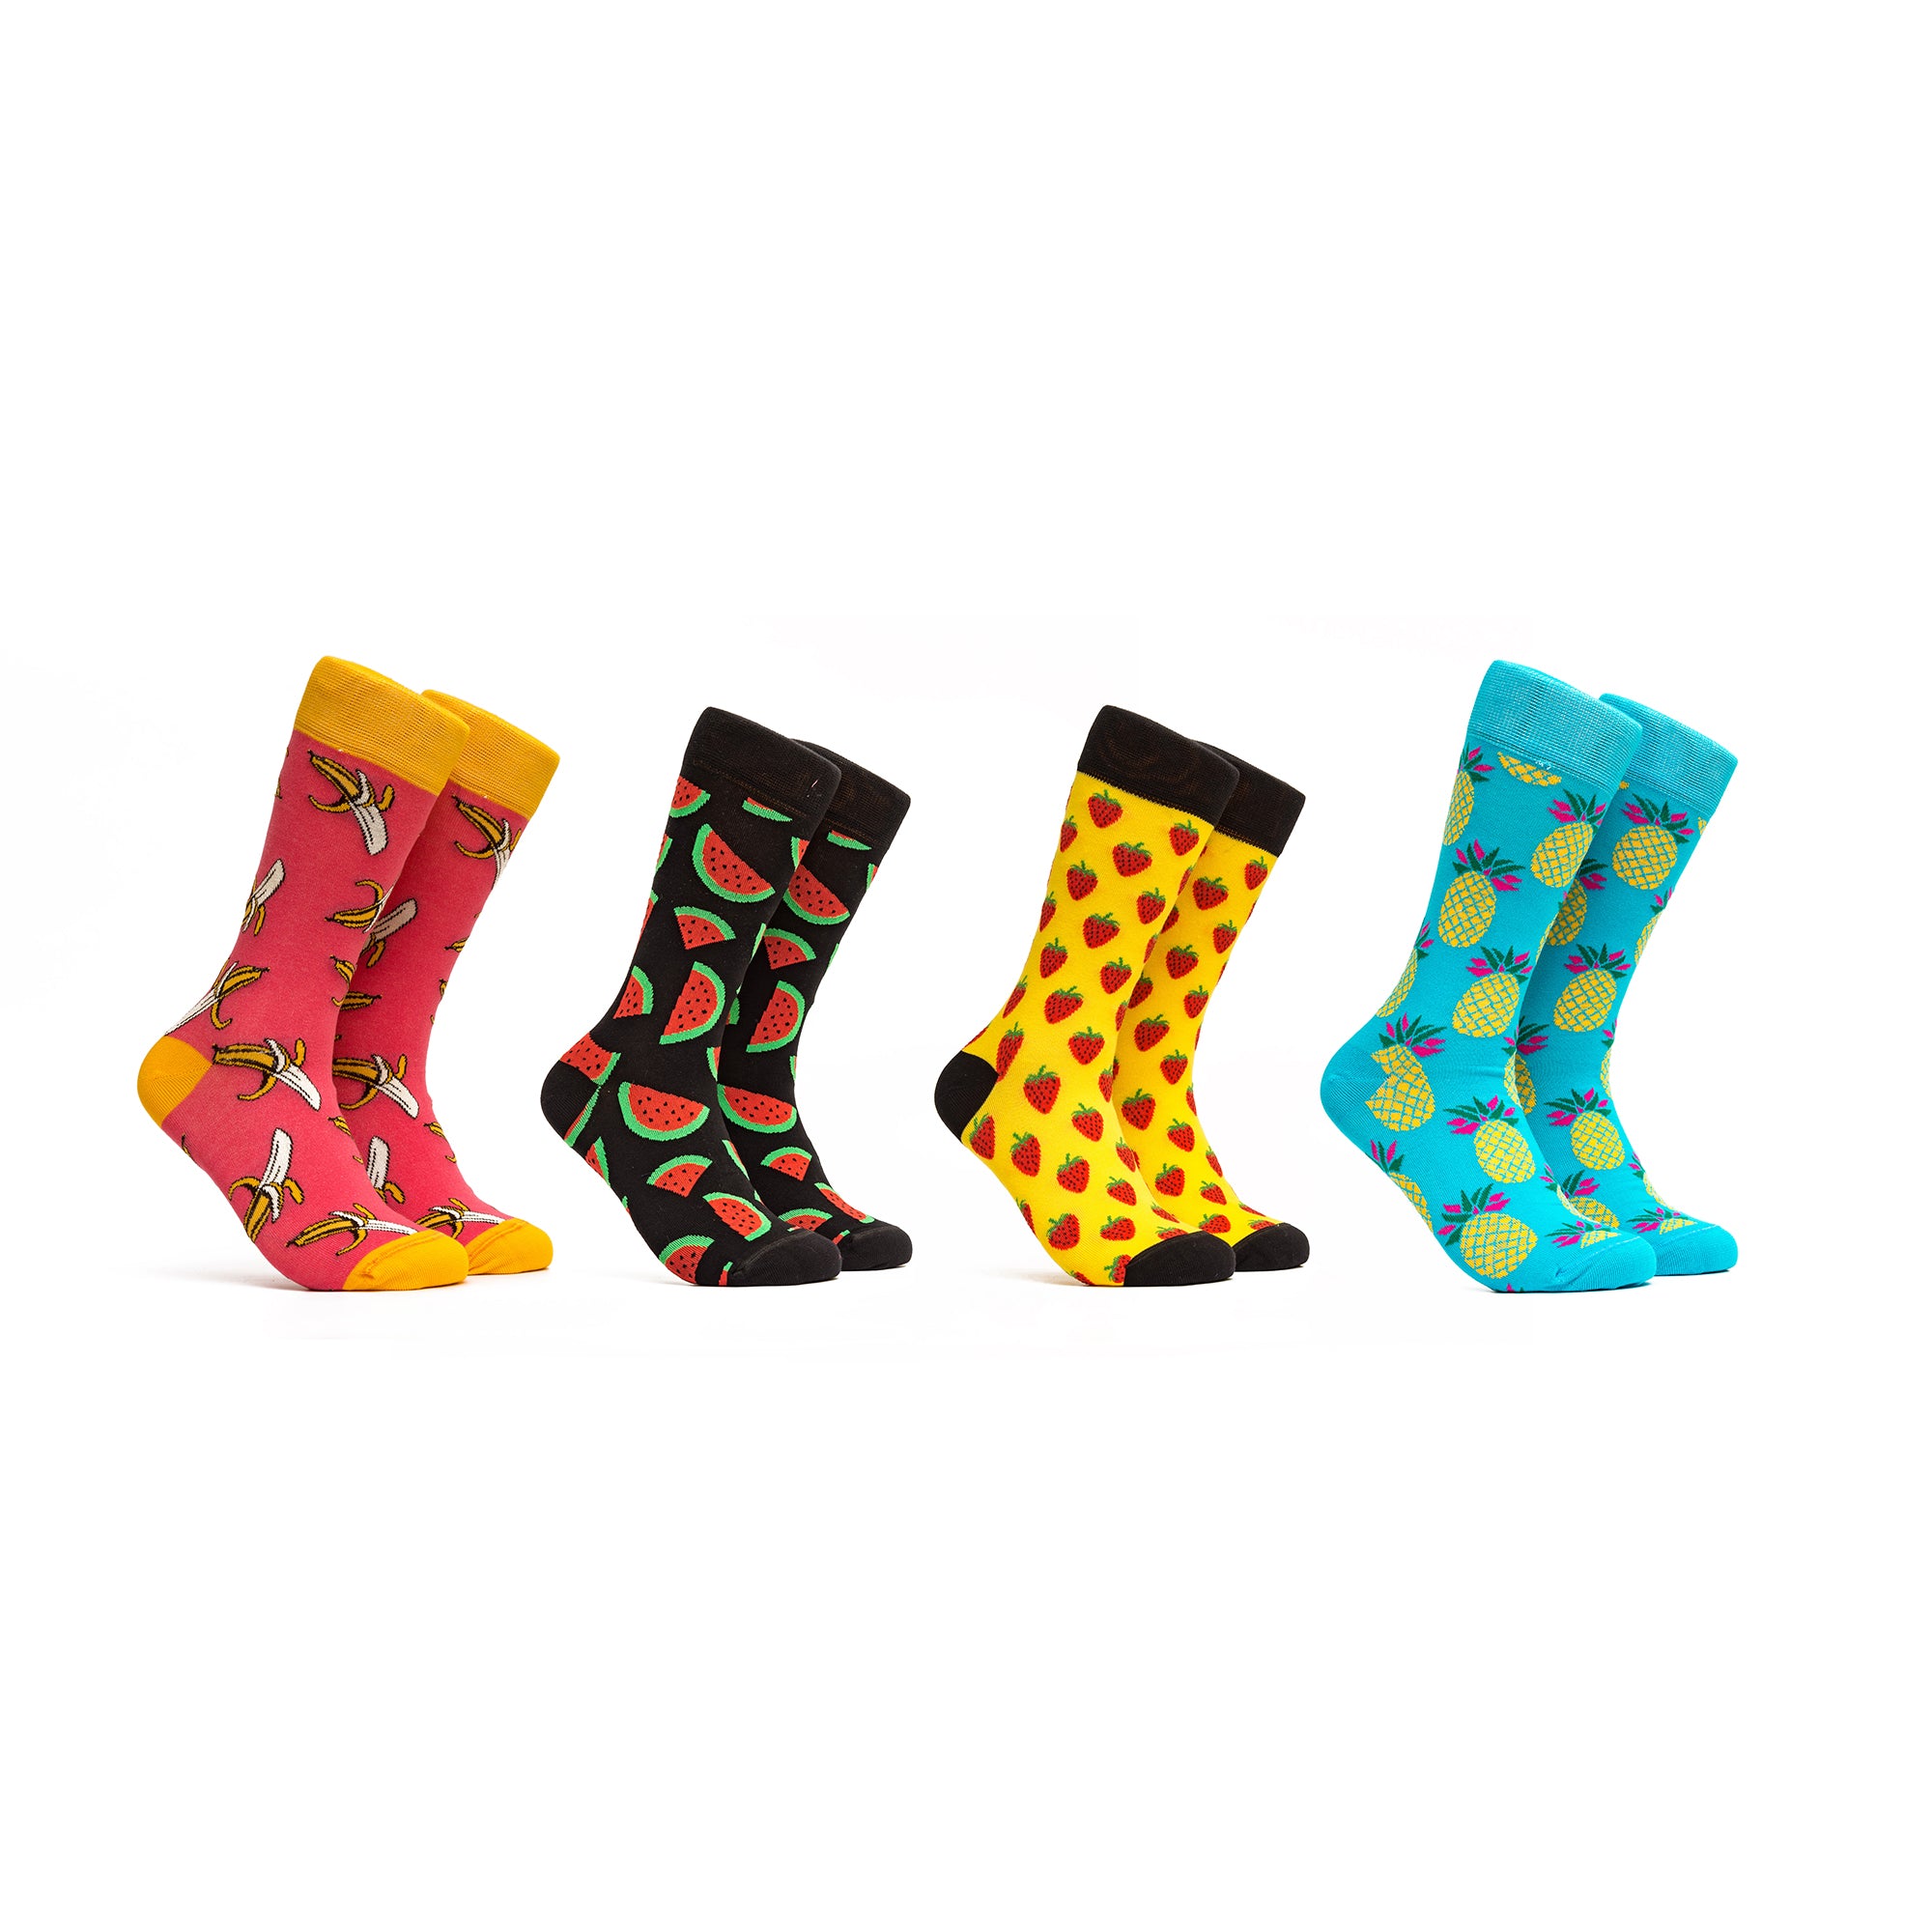 Tutti Frutti Socks Gift Box - Colors Black, Pink, Yellow, Blue - 4 Pairs